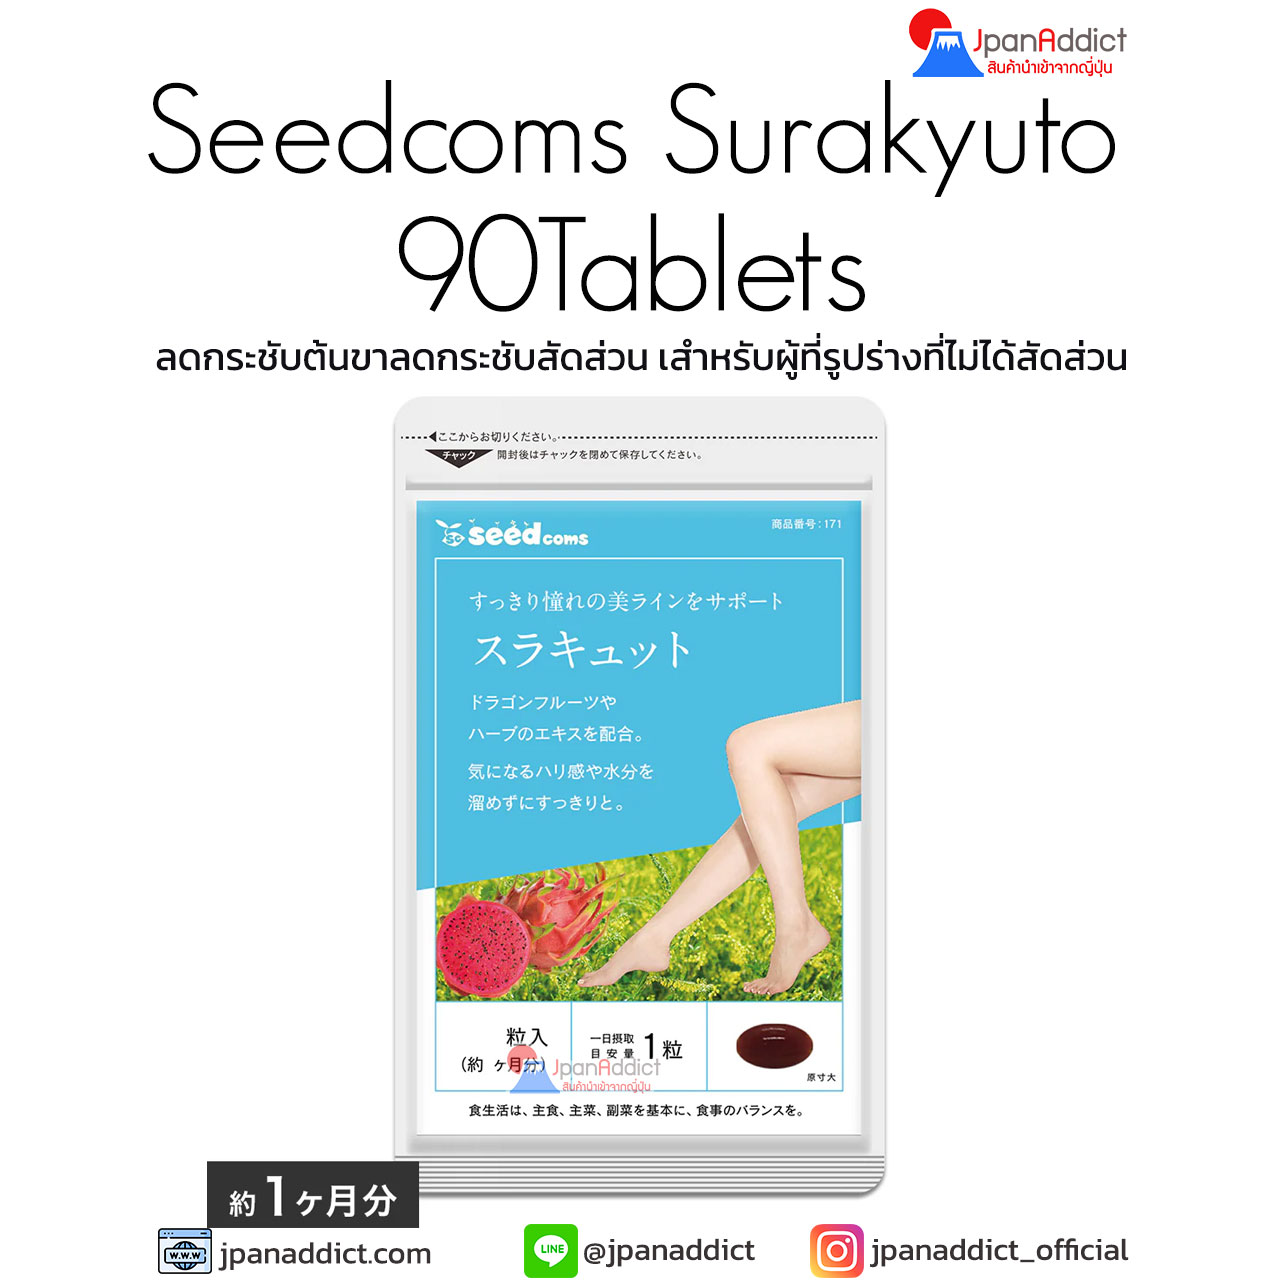 Seedcoms Surakyuto 90 Tablets ลดกระชับต้นขา